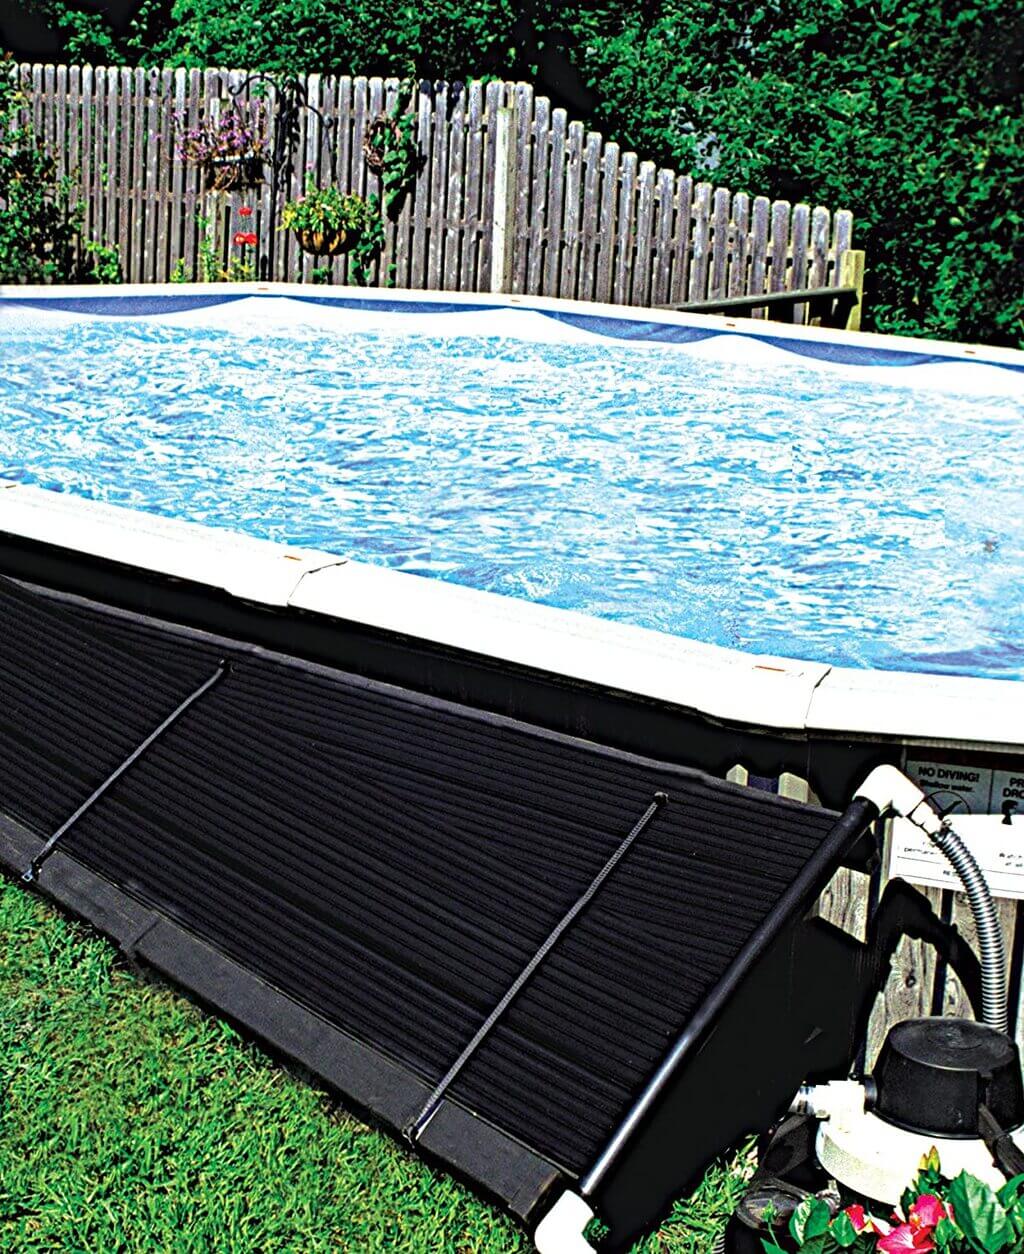 SunHeater S120U Universal Solar Pool Heater